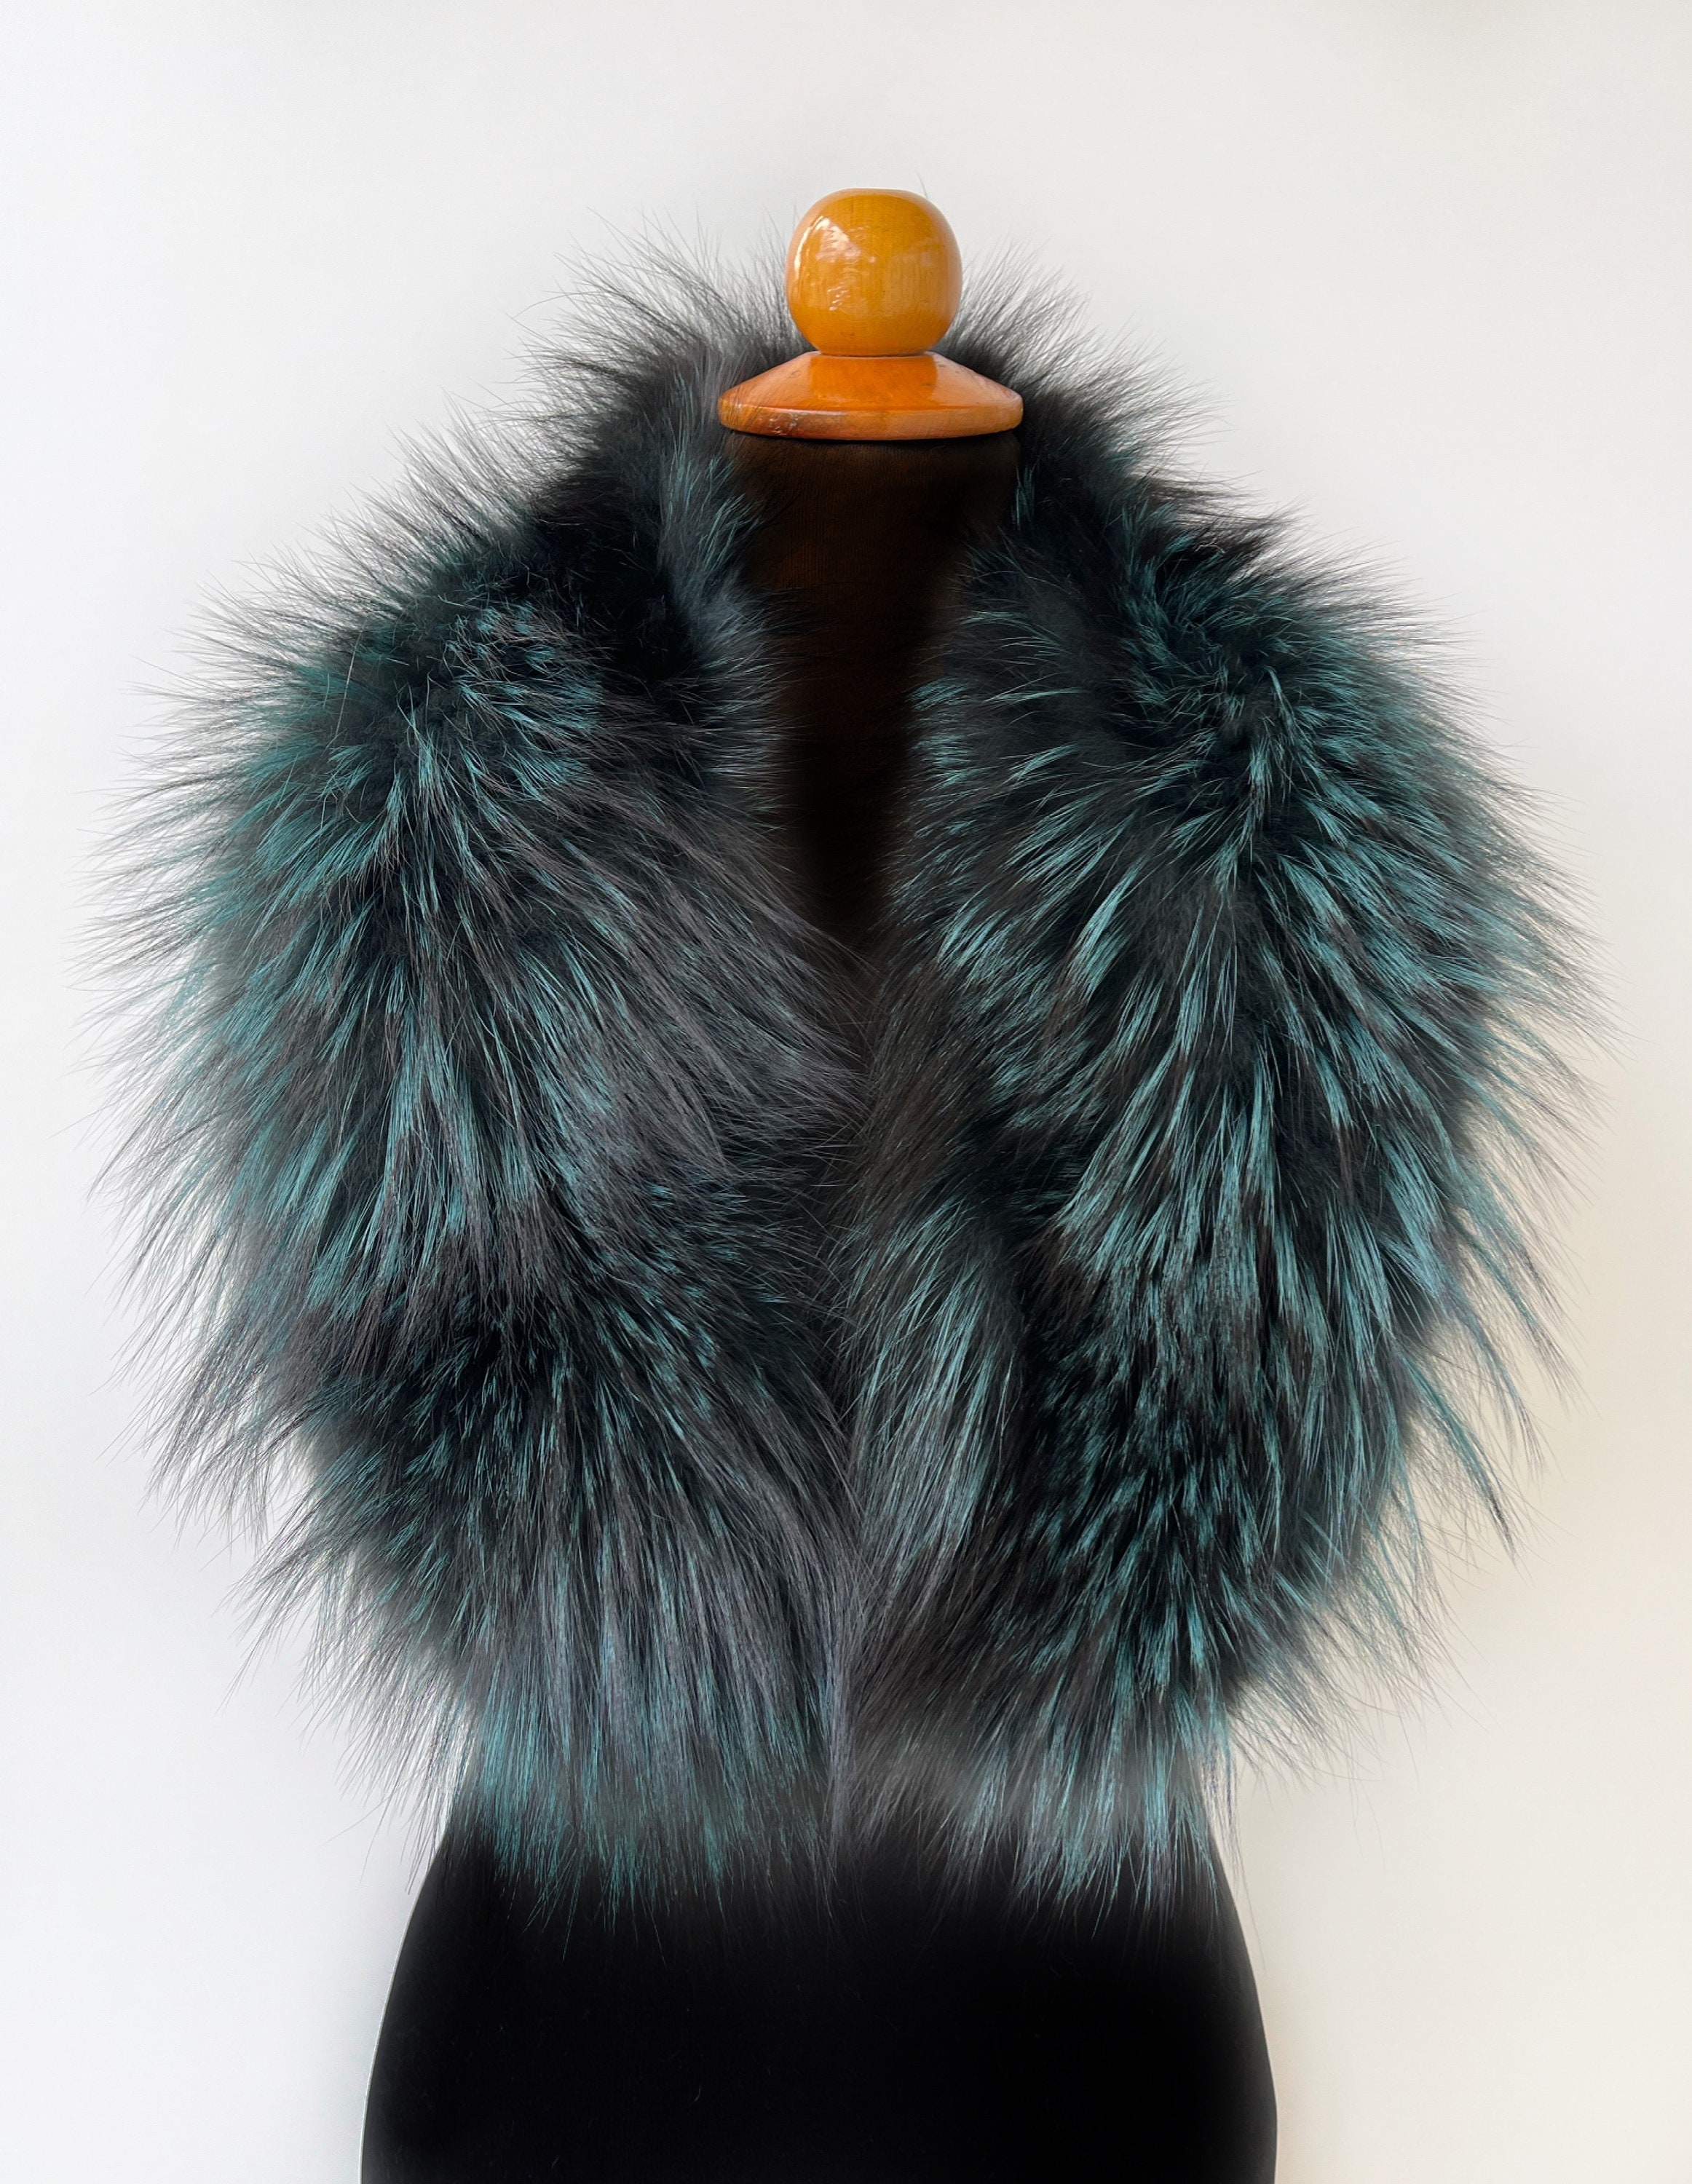 MAGIMODAC Faux Fur Collar Detachable Hood Trim Replacement Neck Warmer Scarf Shawl Wrap for Winter Coat Jacket